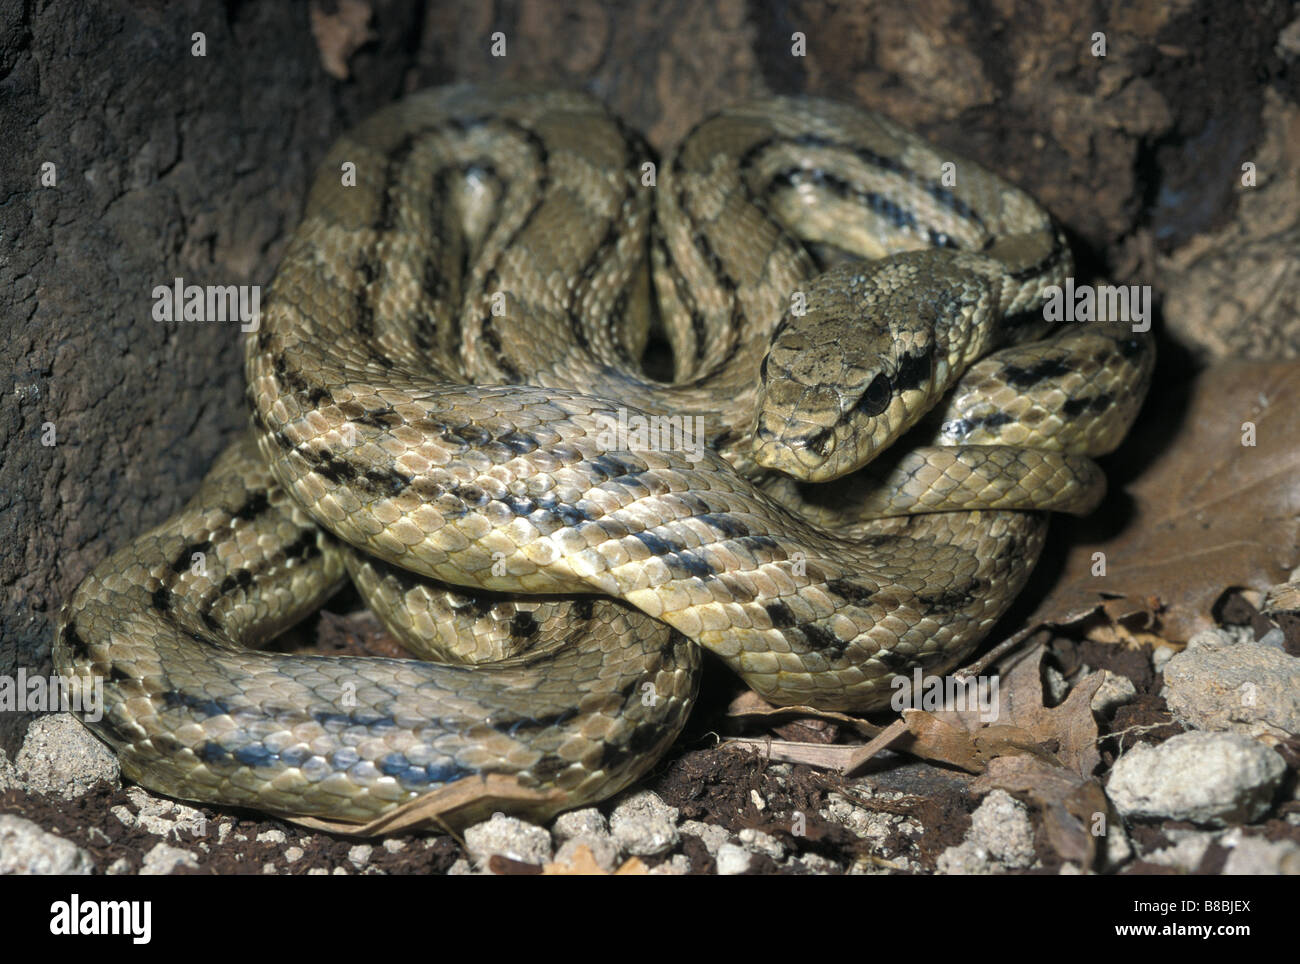 Four lined Snake, Elaphe quatuorlineata, cervone, Colubridae, Italy Stock Photo